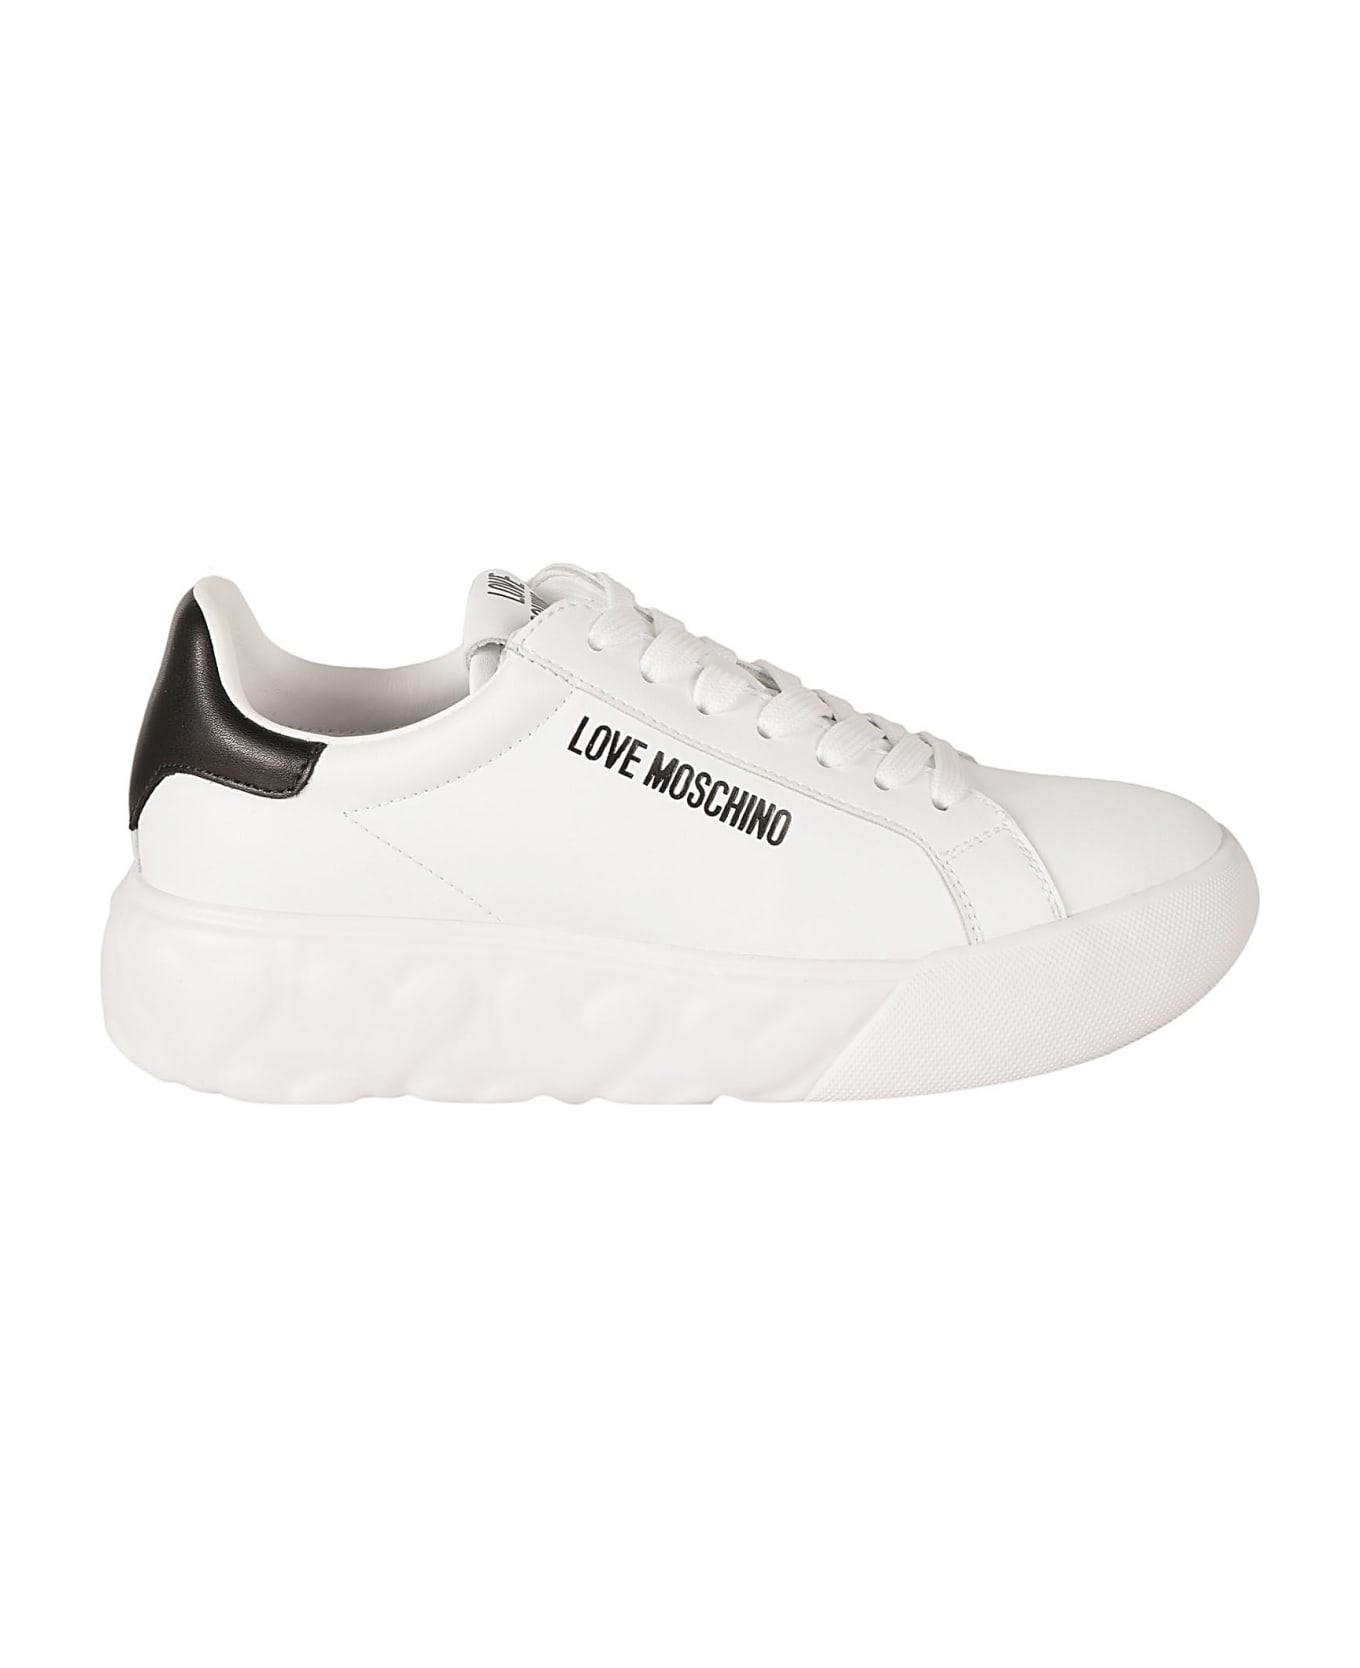 Love Moschino Heart 45 Sneakers - White/Black スニーカー